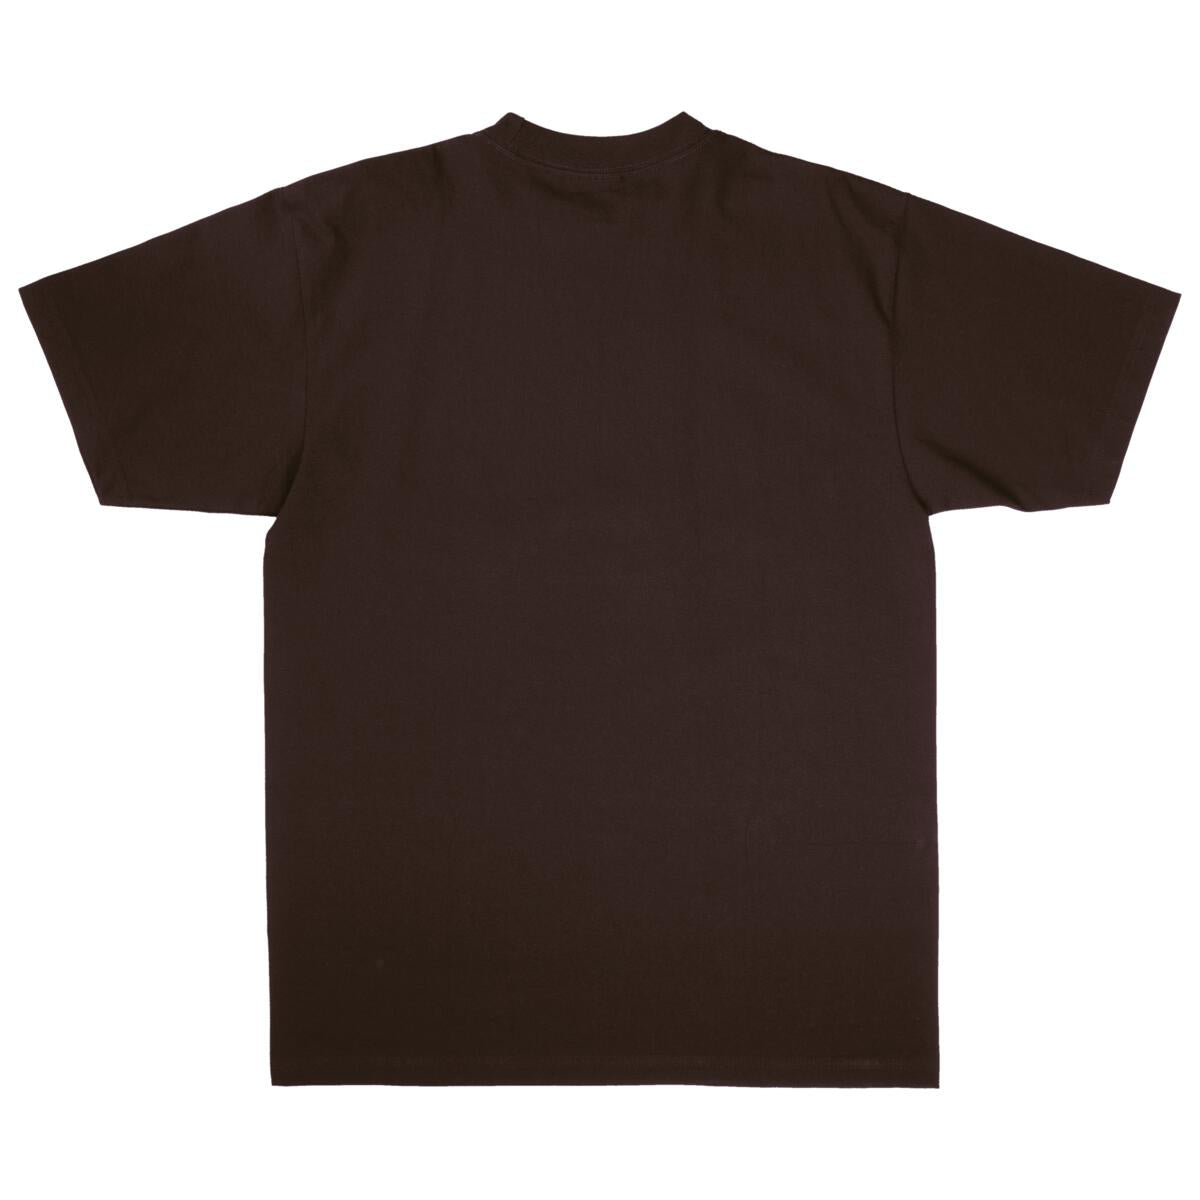 Lonely Hearts Club - 100% Organic Garment-dye T-Shirt